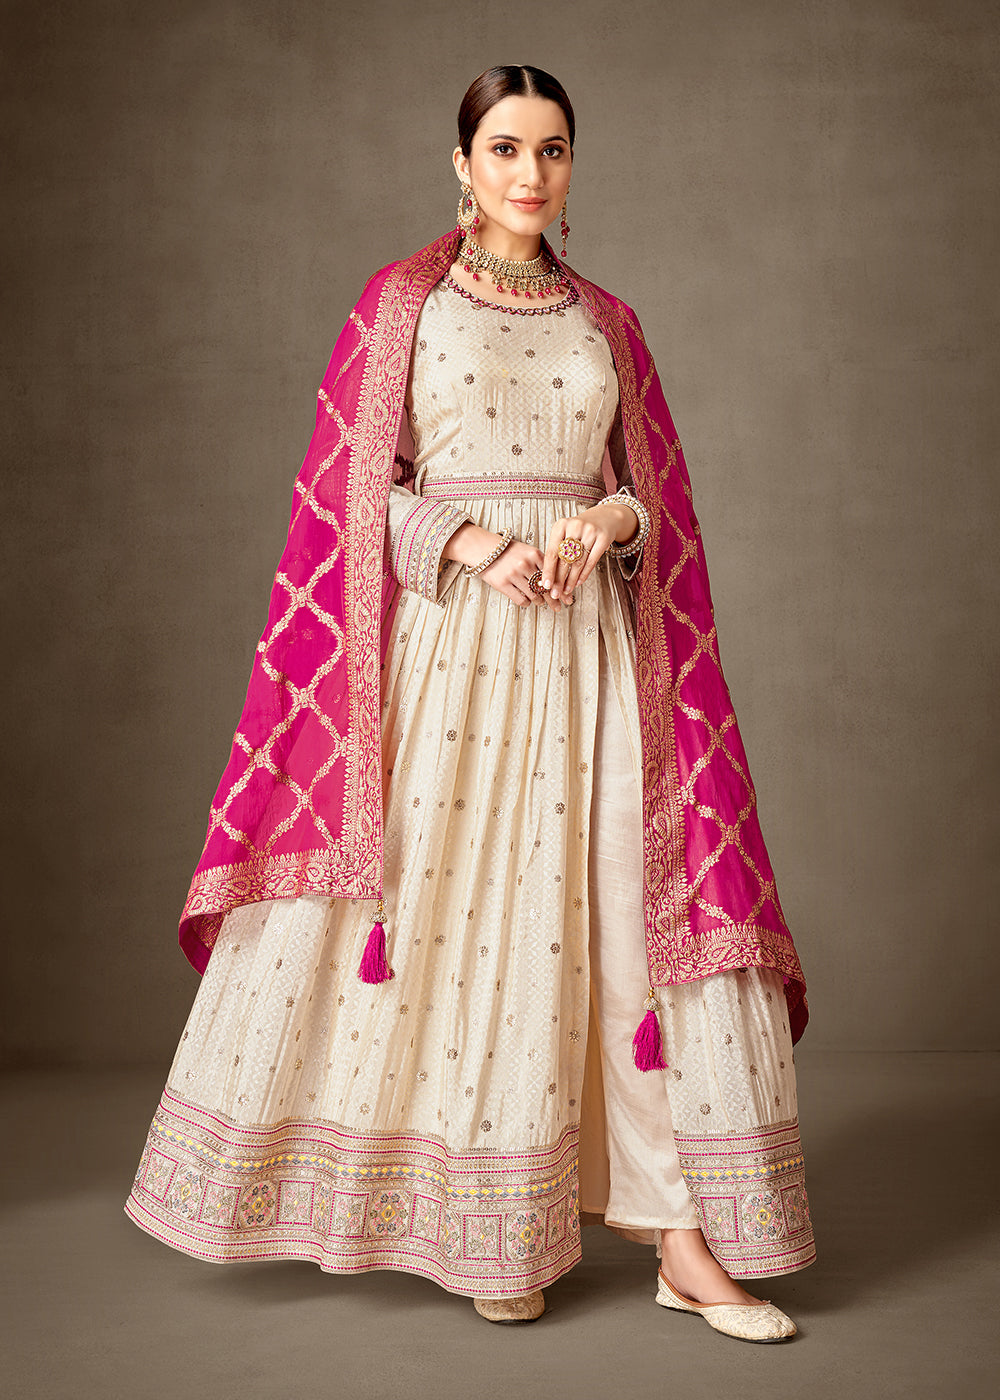 Buy Now Cream & Pink Pure Silk Jacquard Slit Style Anarkali Dress Online in USA, UK, Australia, New Zealand, Canada & Worldwide at Empress Clothing.